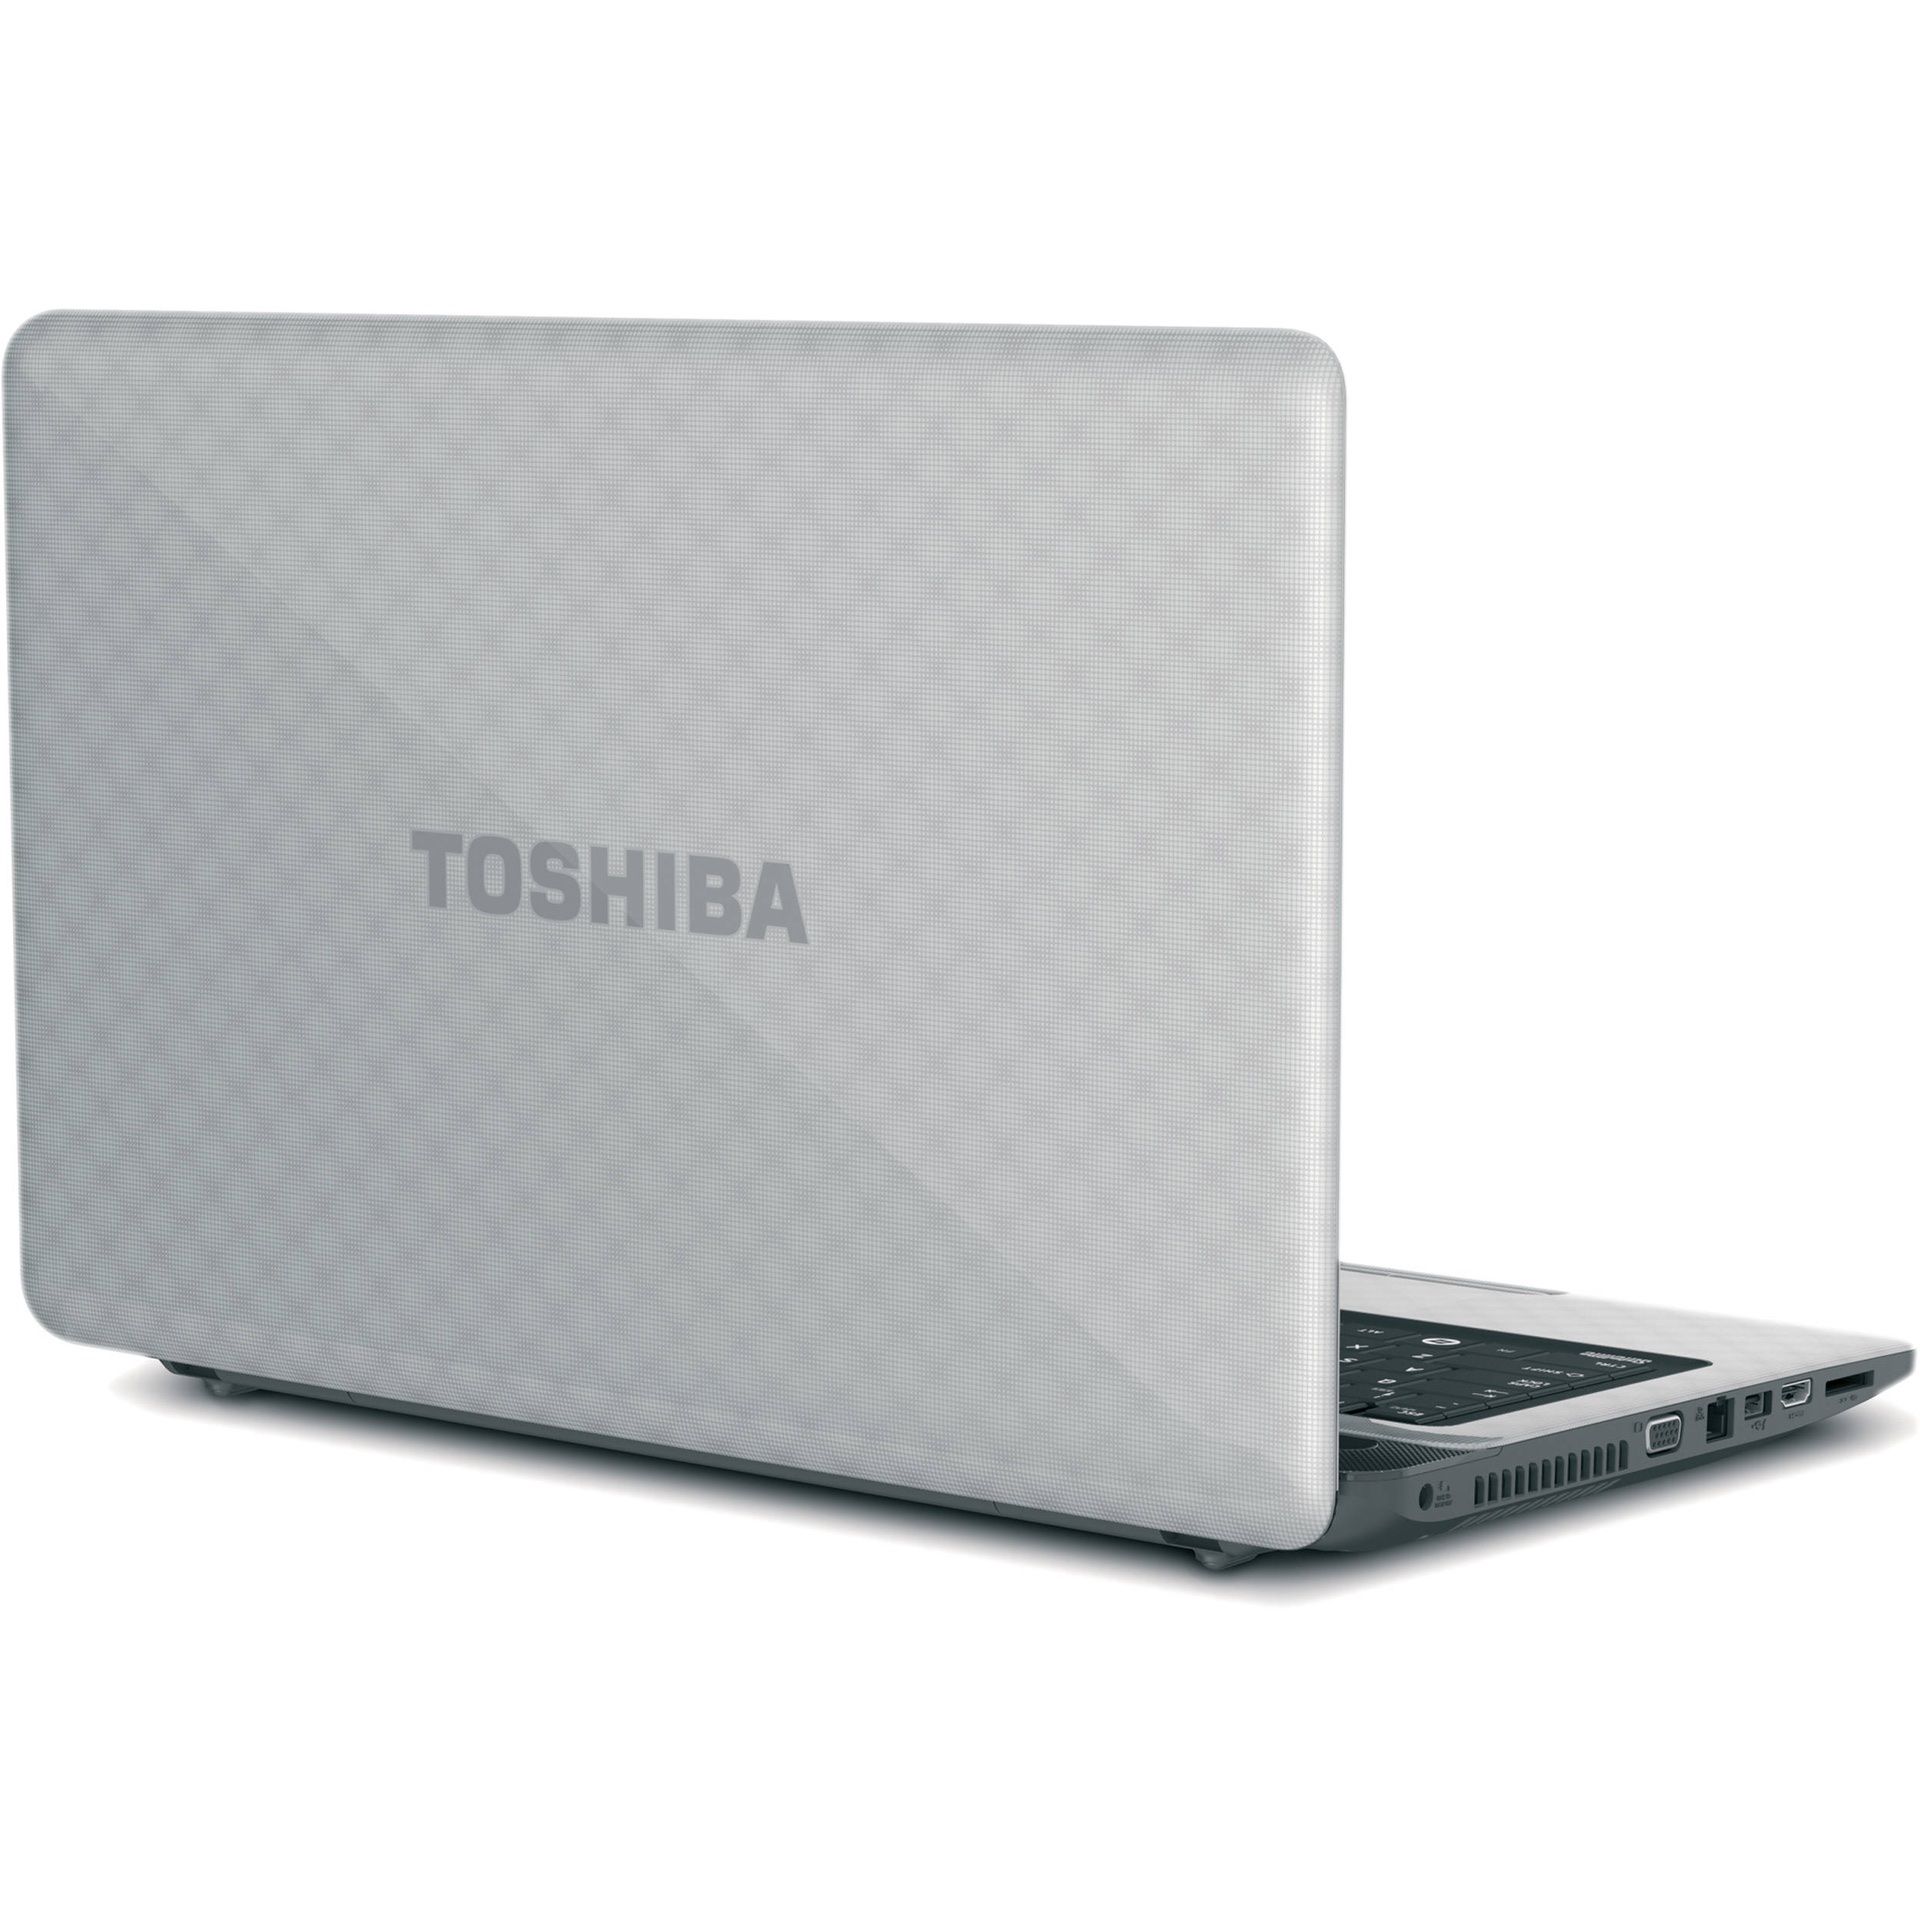 Toshiba laptop 15 Inch Screen